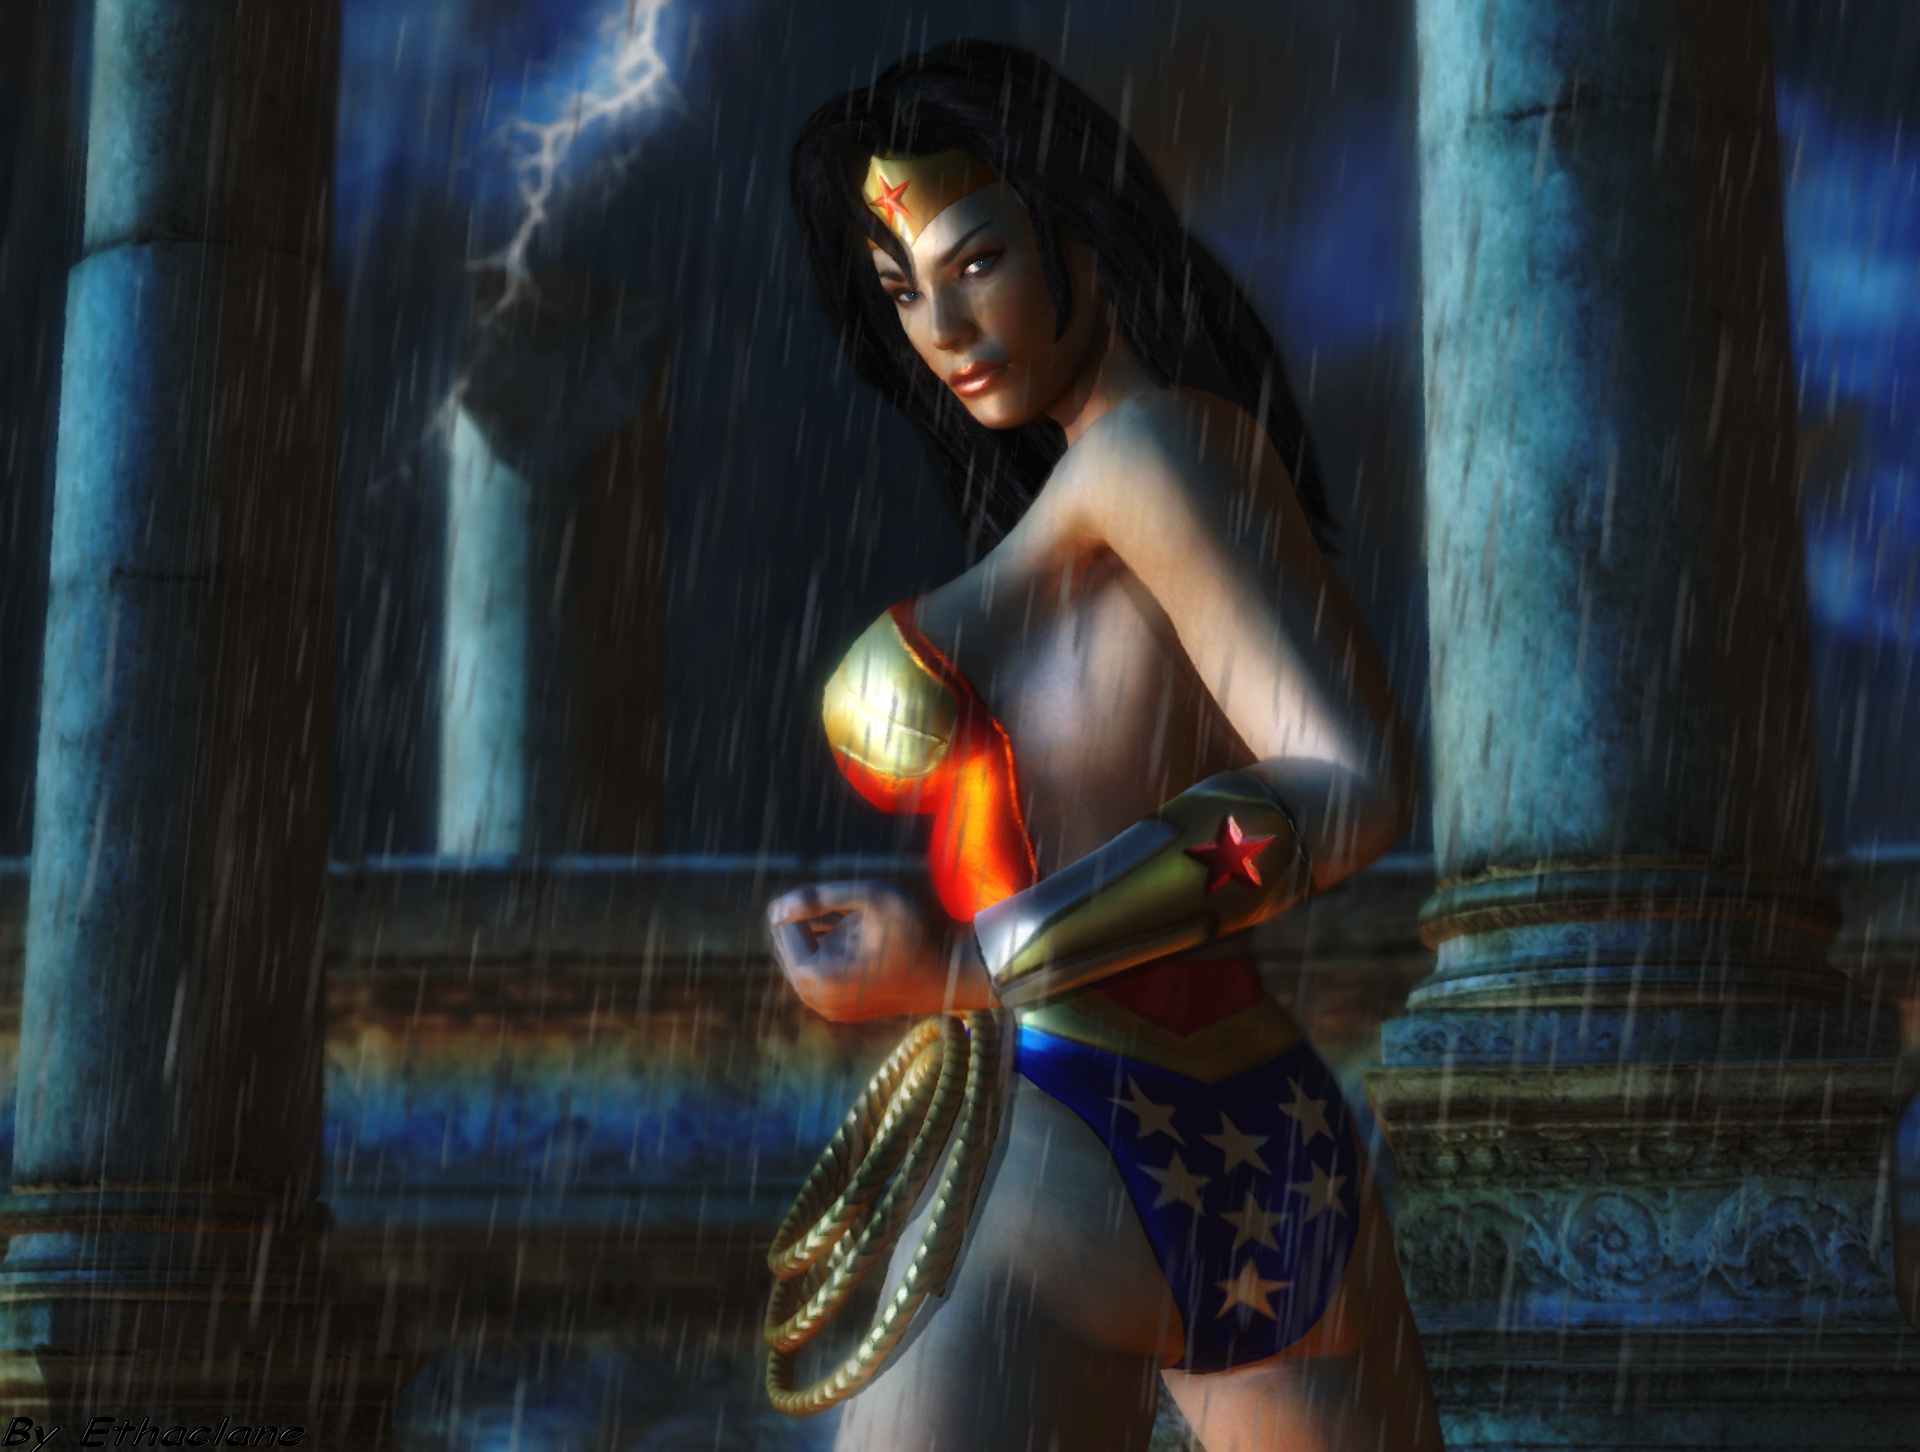 Wallpaper Games Ethae Wonder Woman